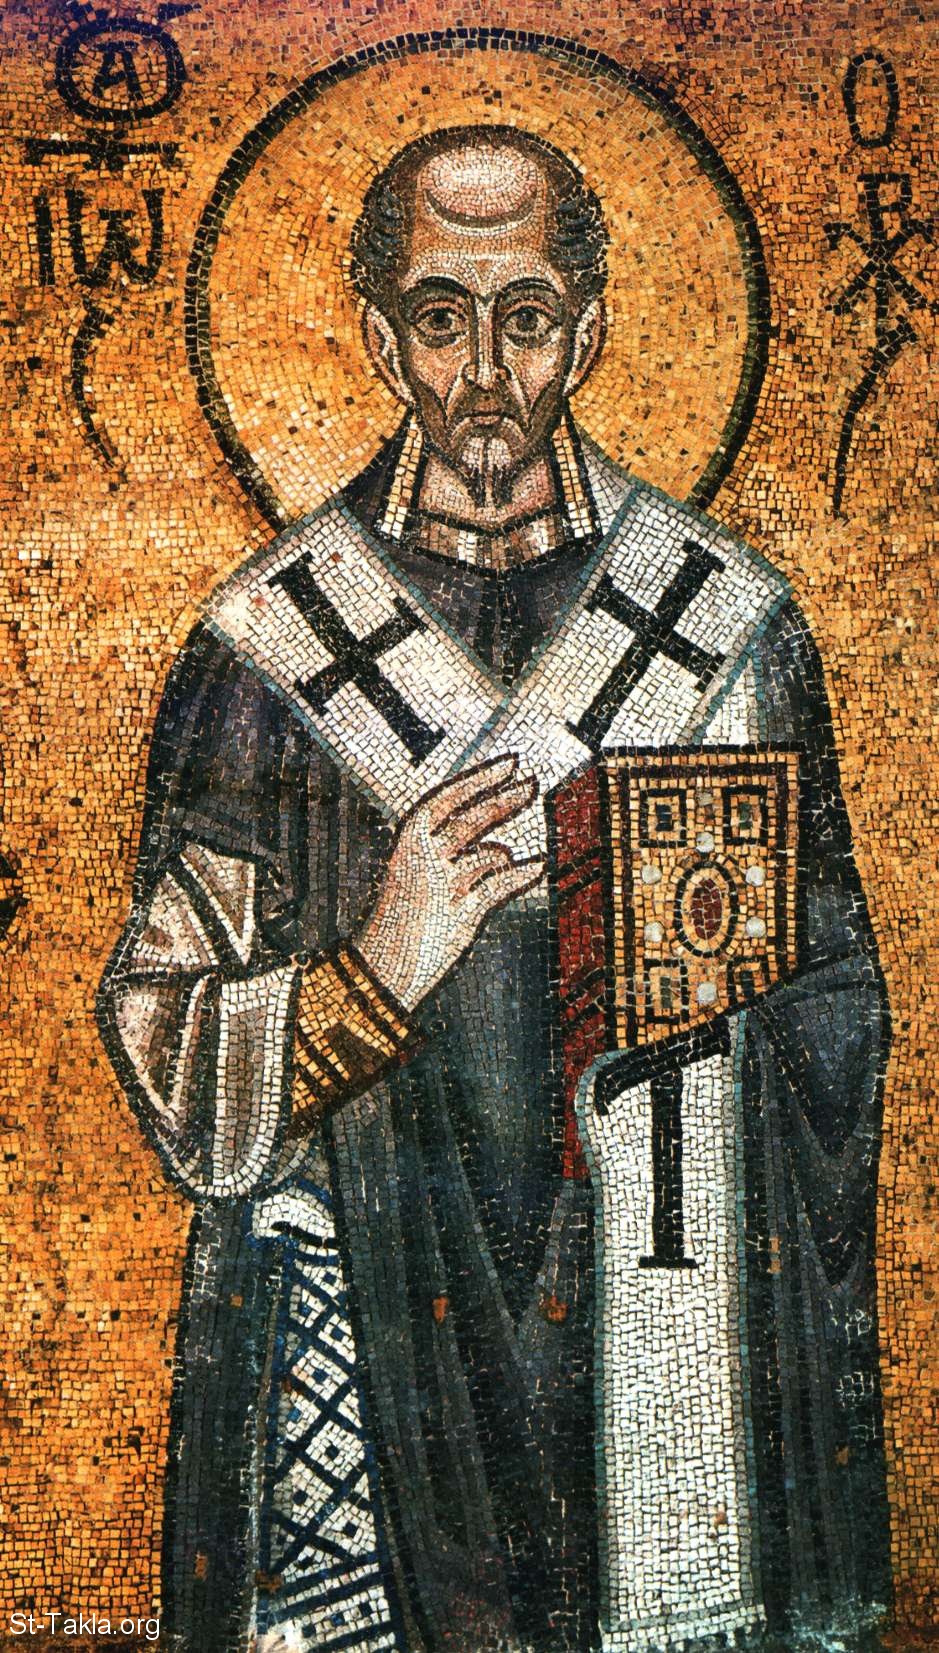 St-Takla.org Image: Saint John Chrysostom ancient fresco mosaic صورة في موقع الأنبا تكلا: لوحة فسيفساء فريسكو تصور القديس يوحنا ذهبي الفم